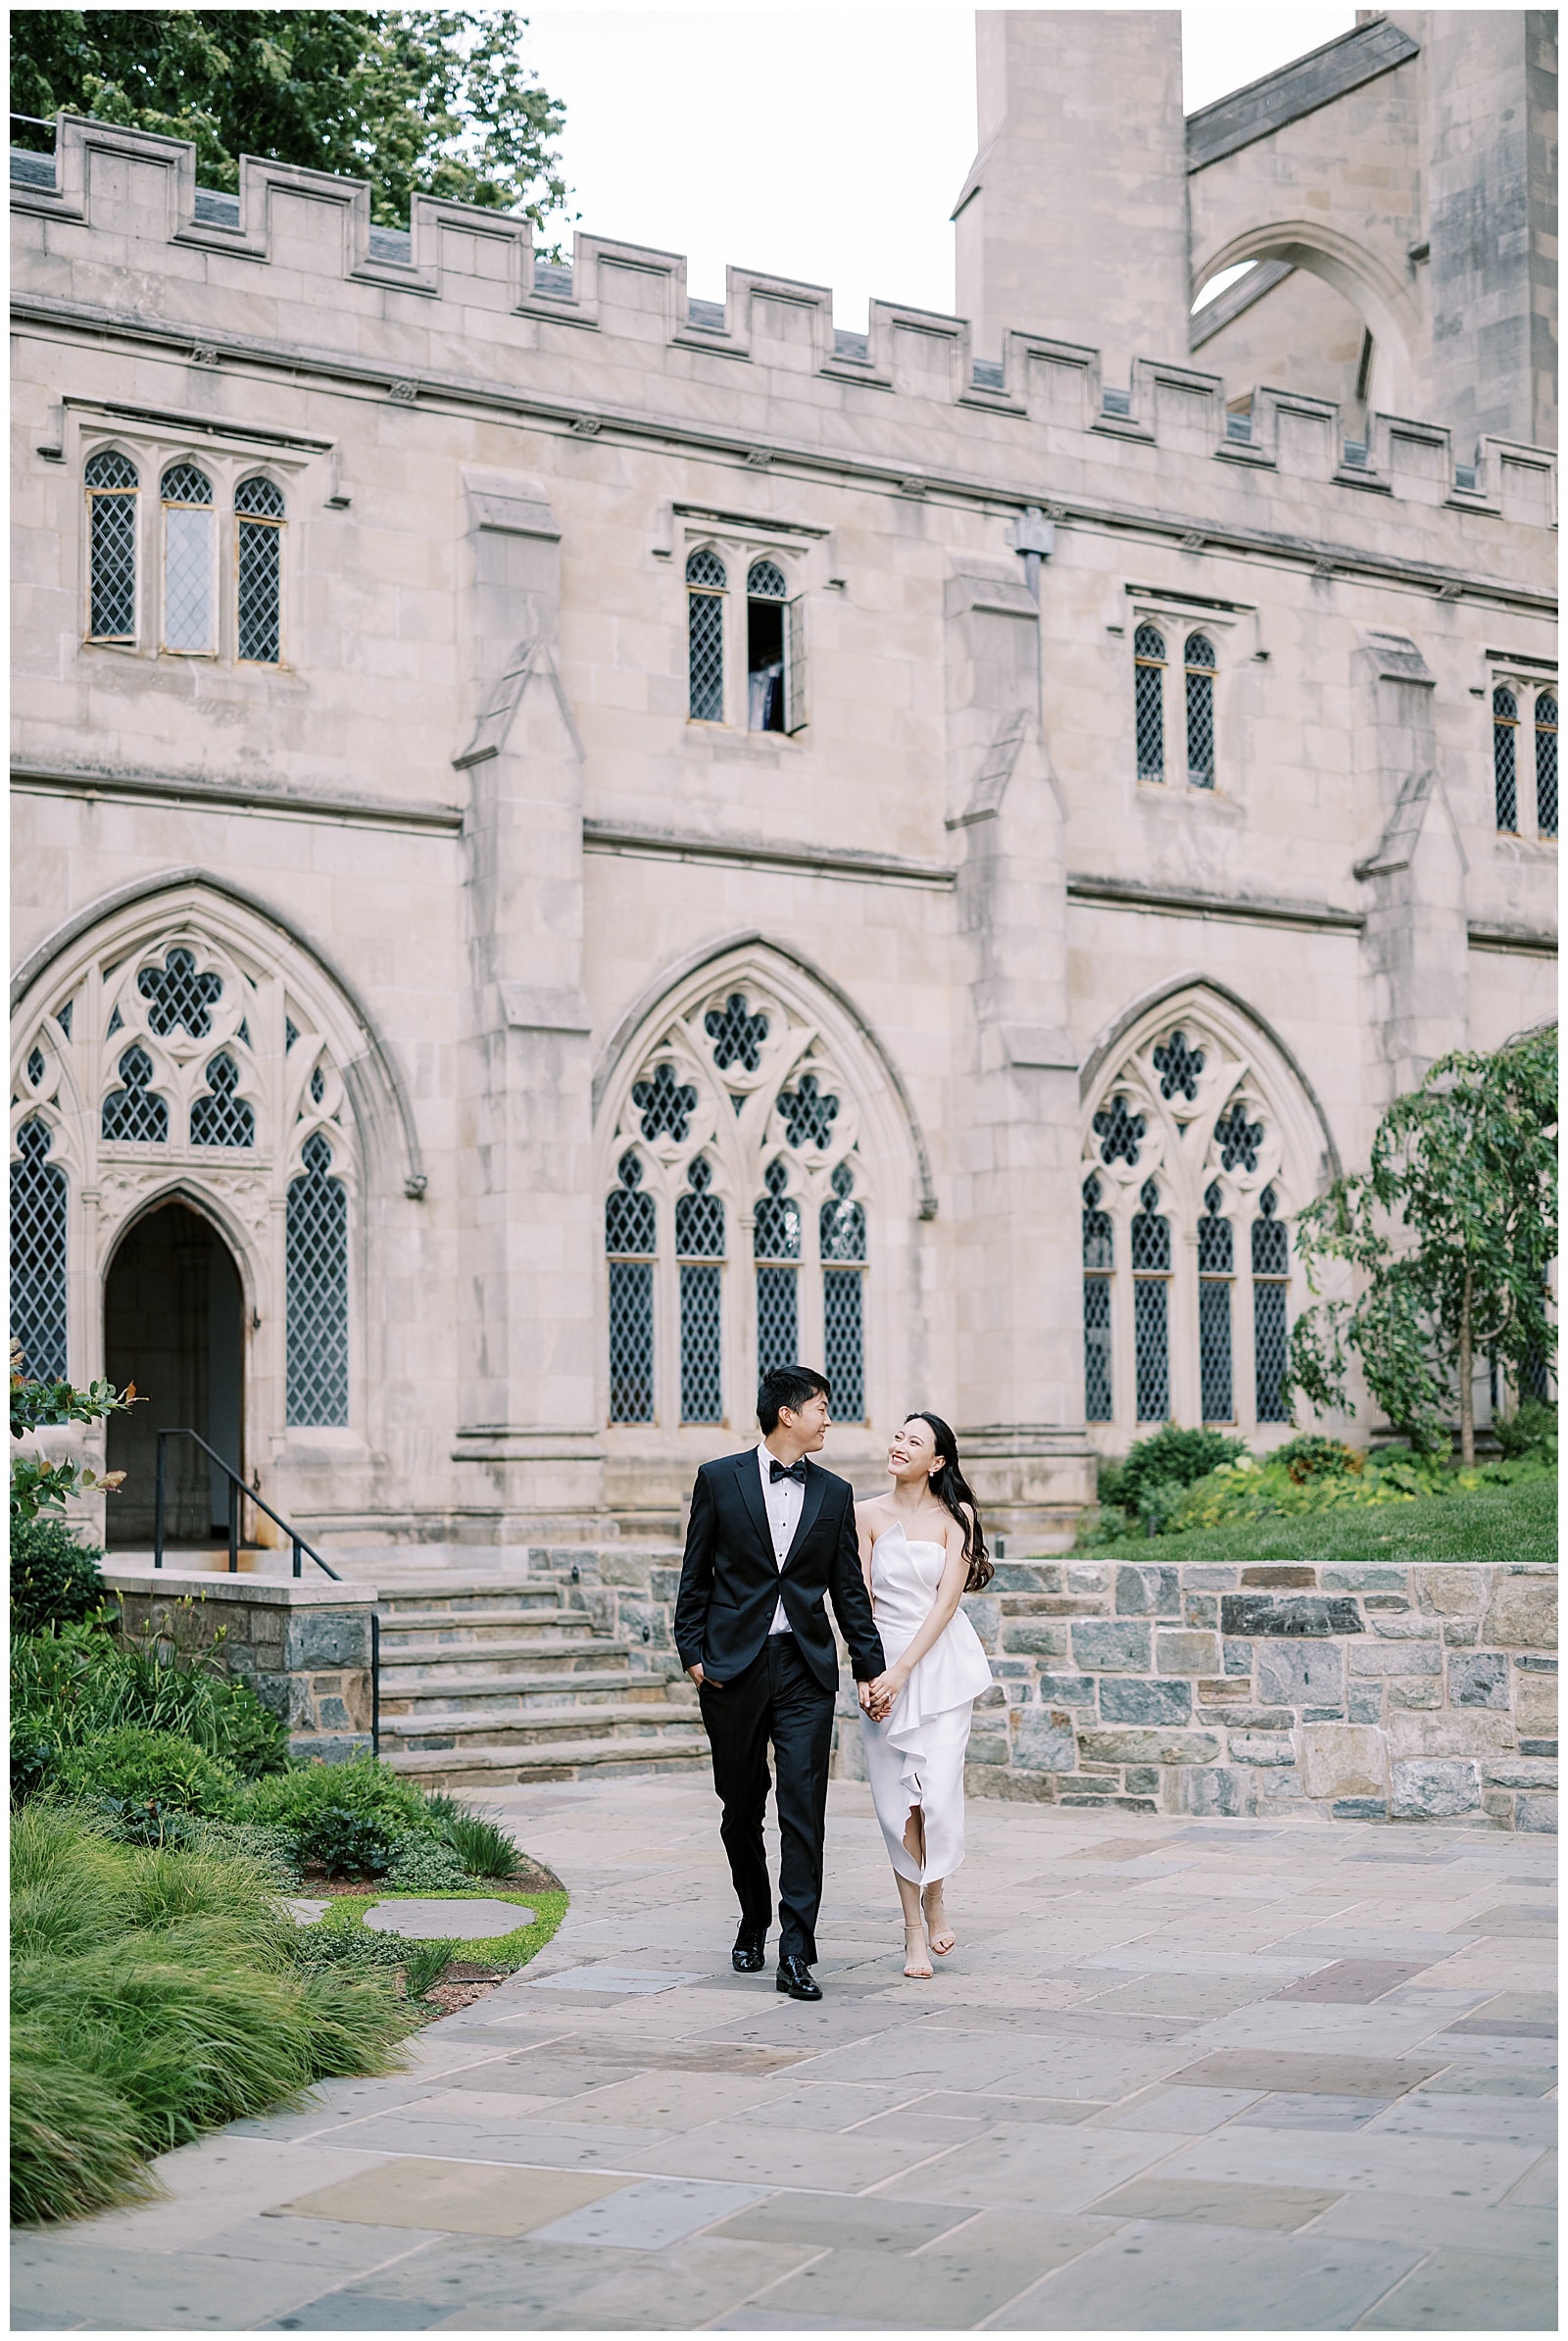 Danielle-Defayette-Photography-Washington-National-Cathedral-Engagement-Photos_0013.jpg